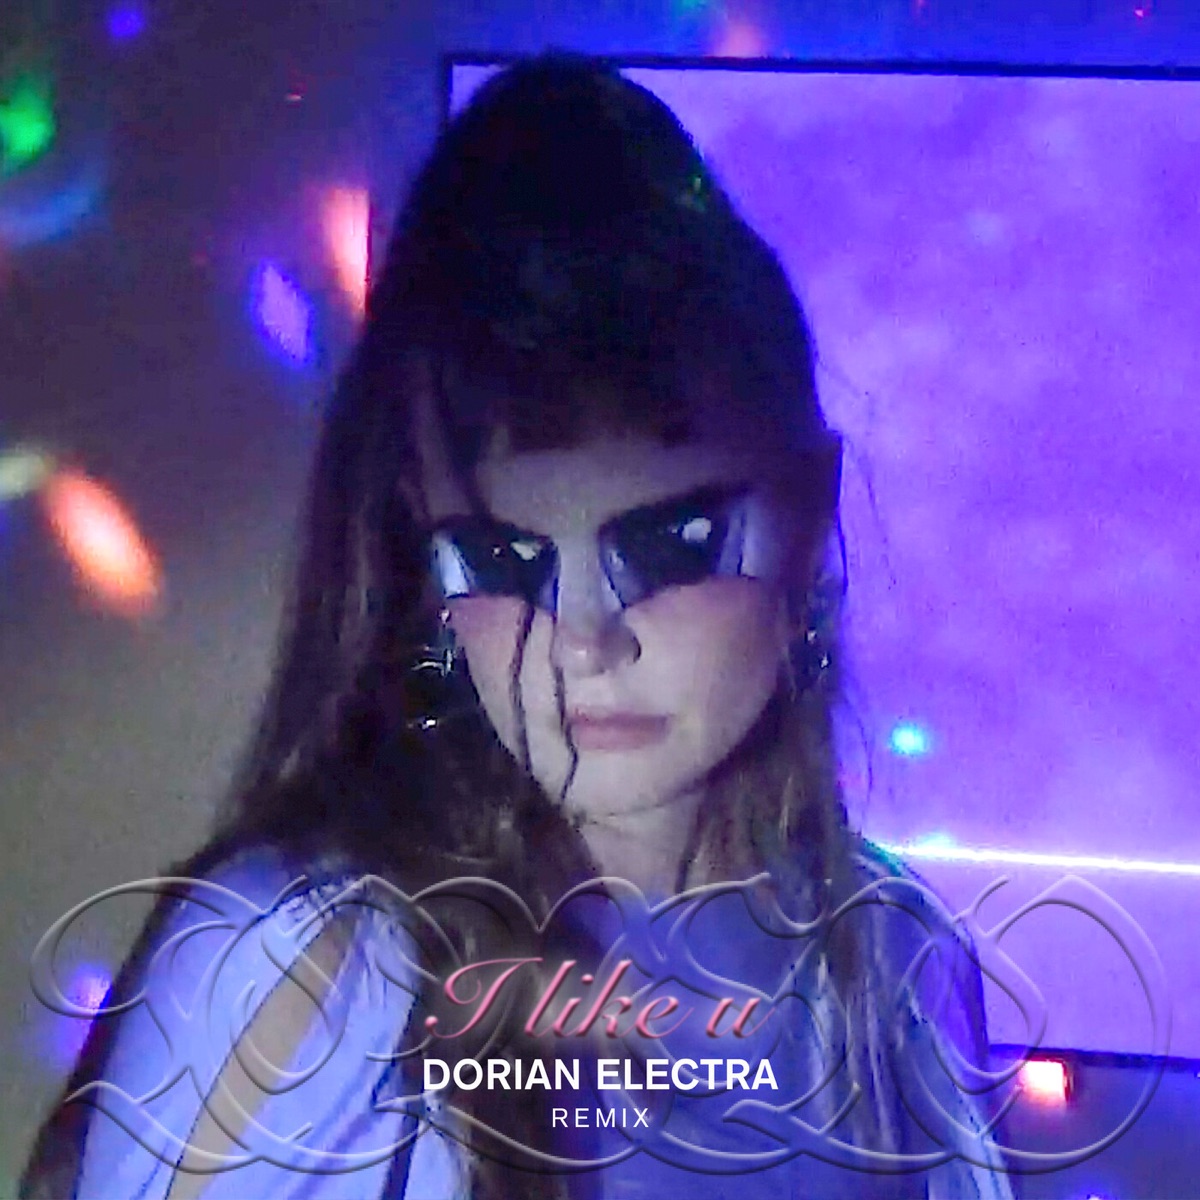 Listen: Dorian Electra - Fanfare